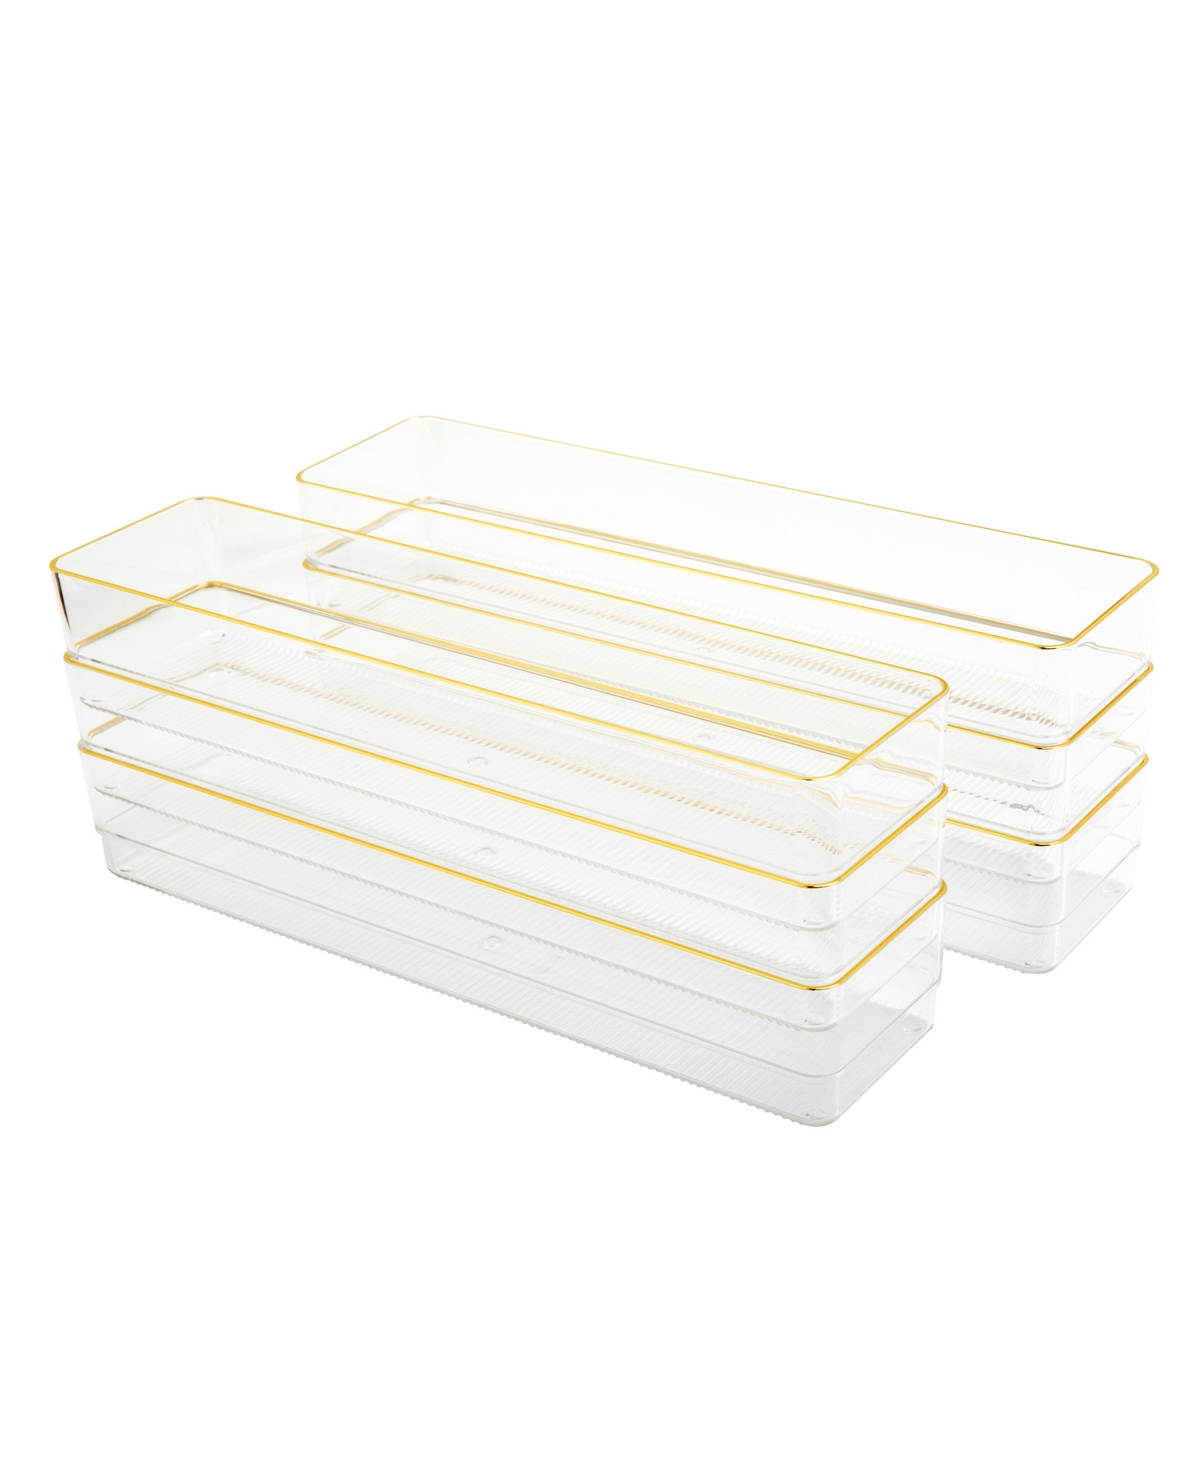 Martha Stewart Kerry 6 Piece Plastic Stackable Office Desk Drawer Organizers, 12" X 3" In Clear,gold Trim